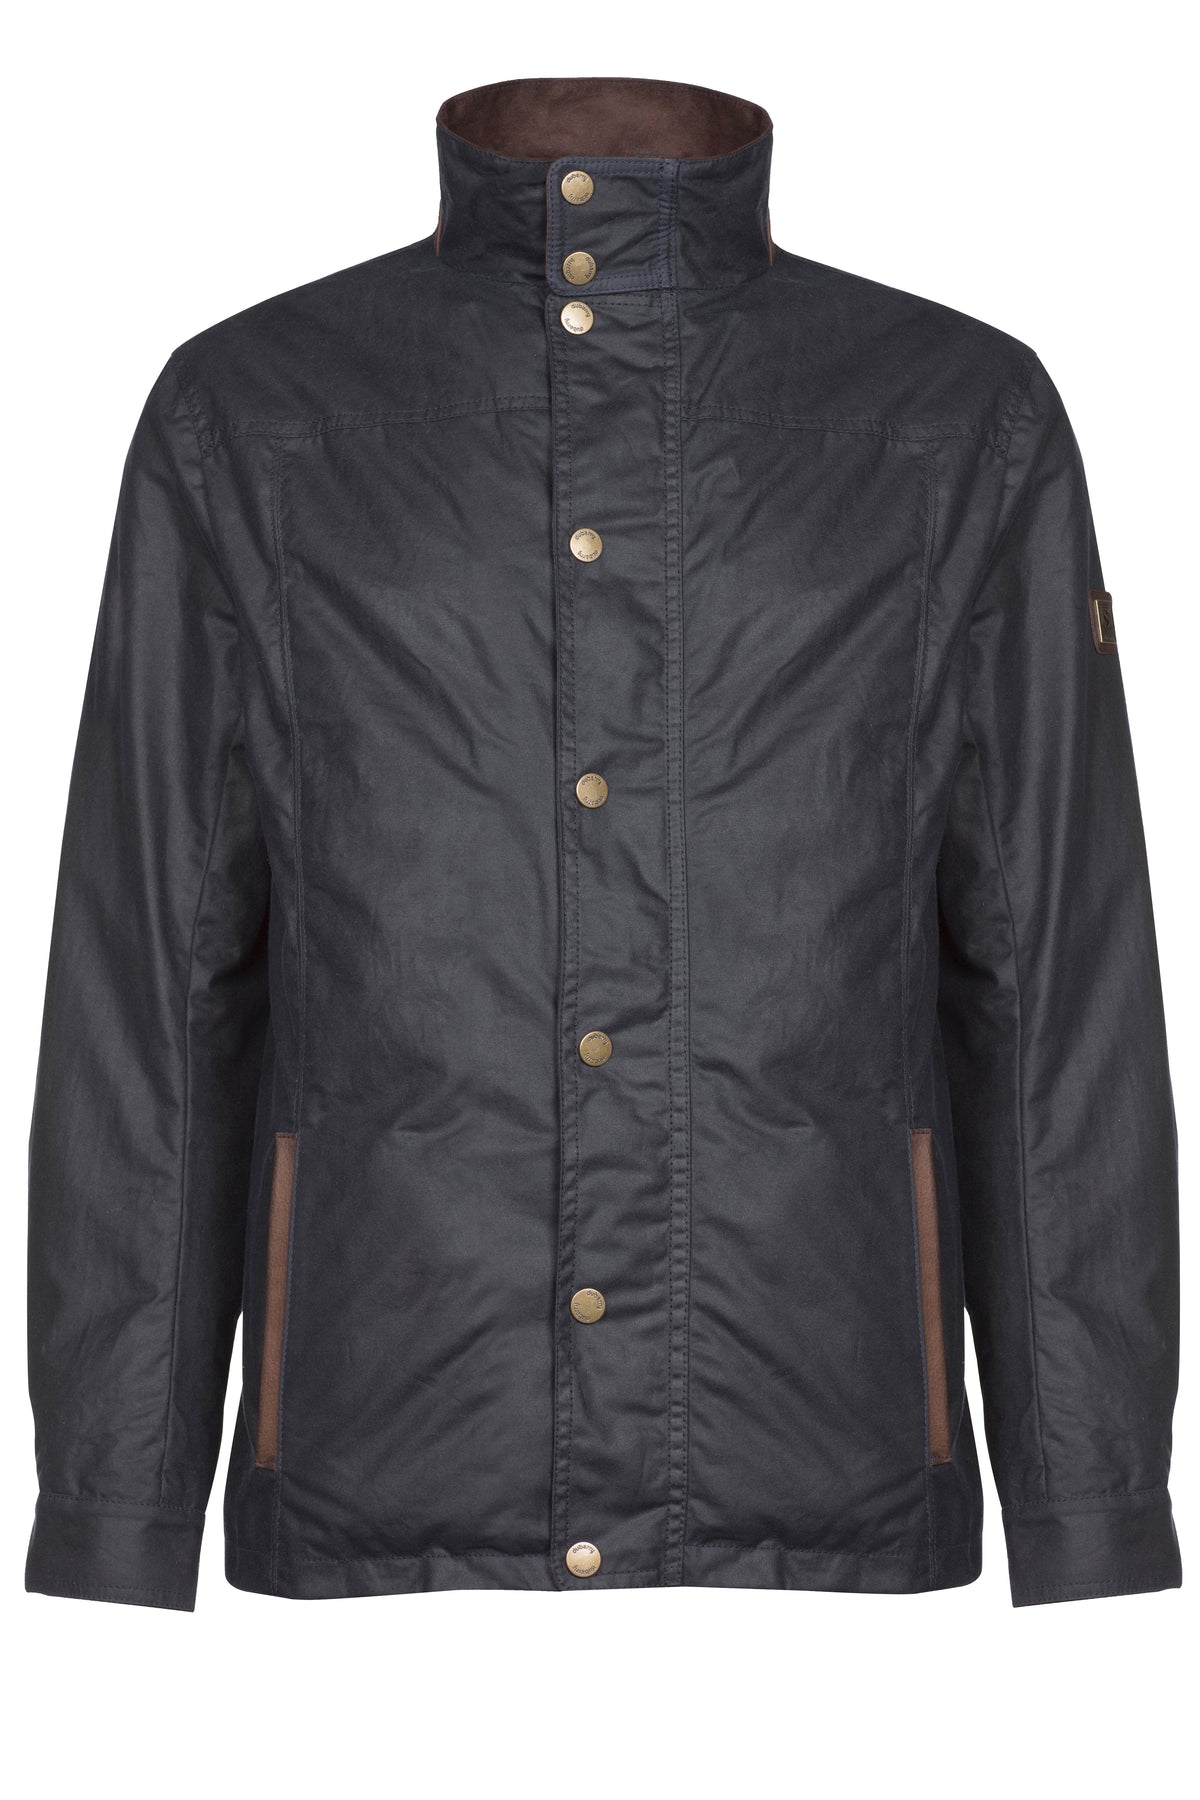 Carrickfergus Waxed Jacket by Dubarry